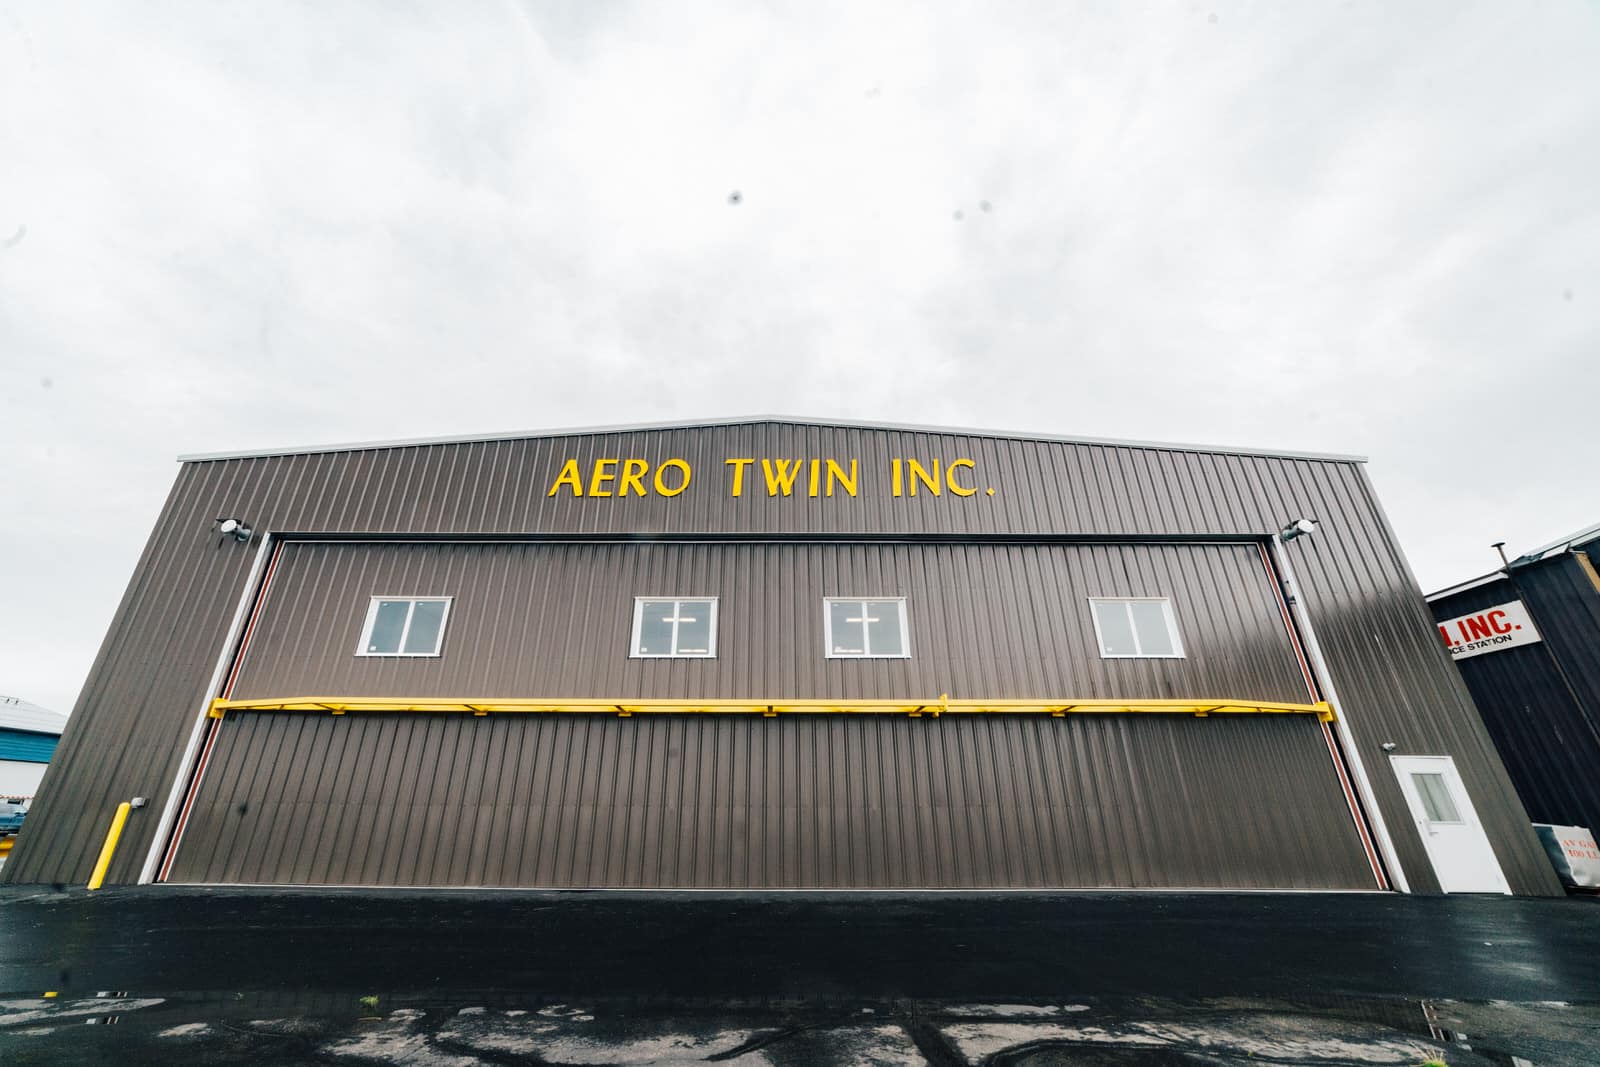 Aero Twin aircraft hangar